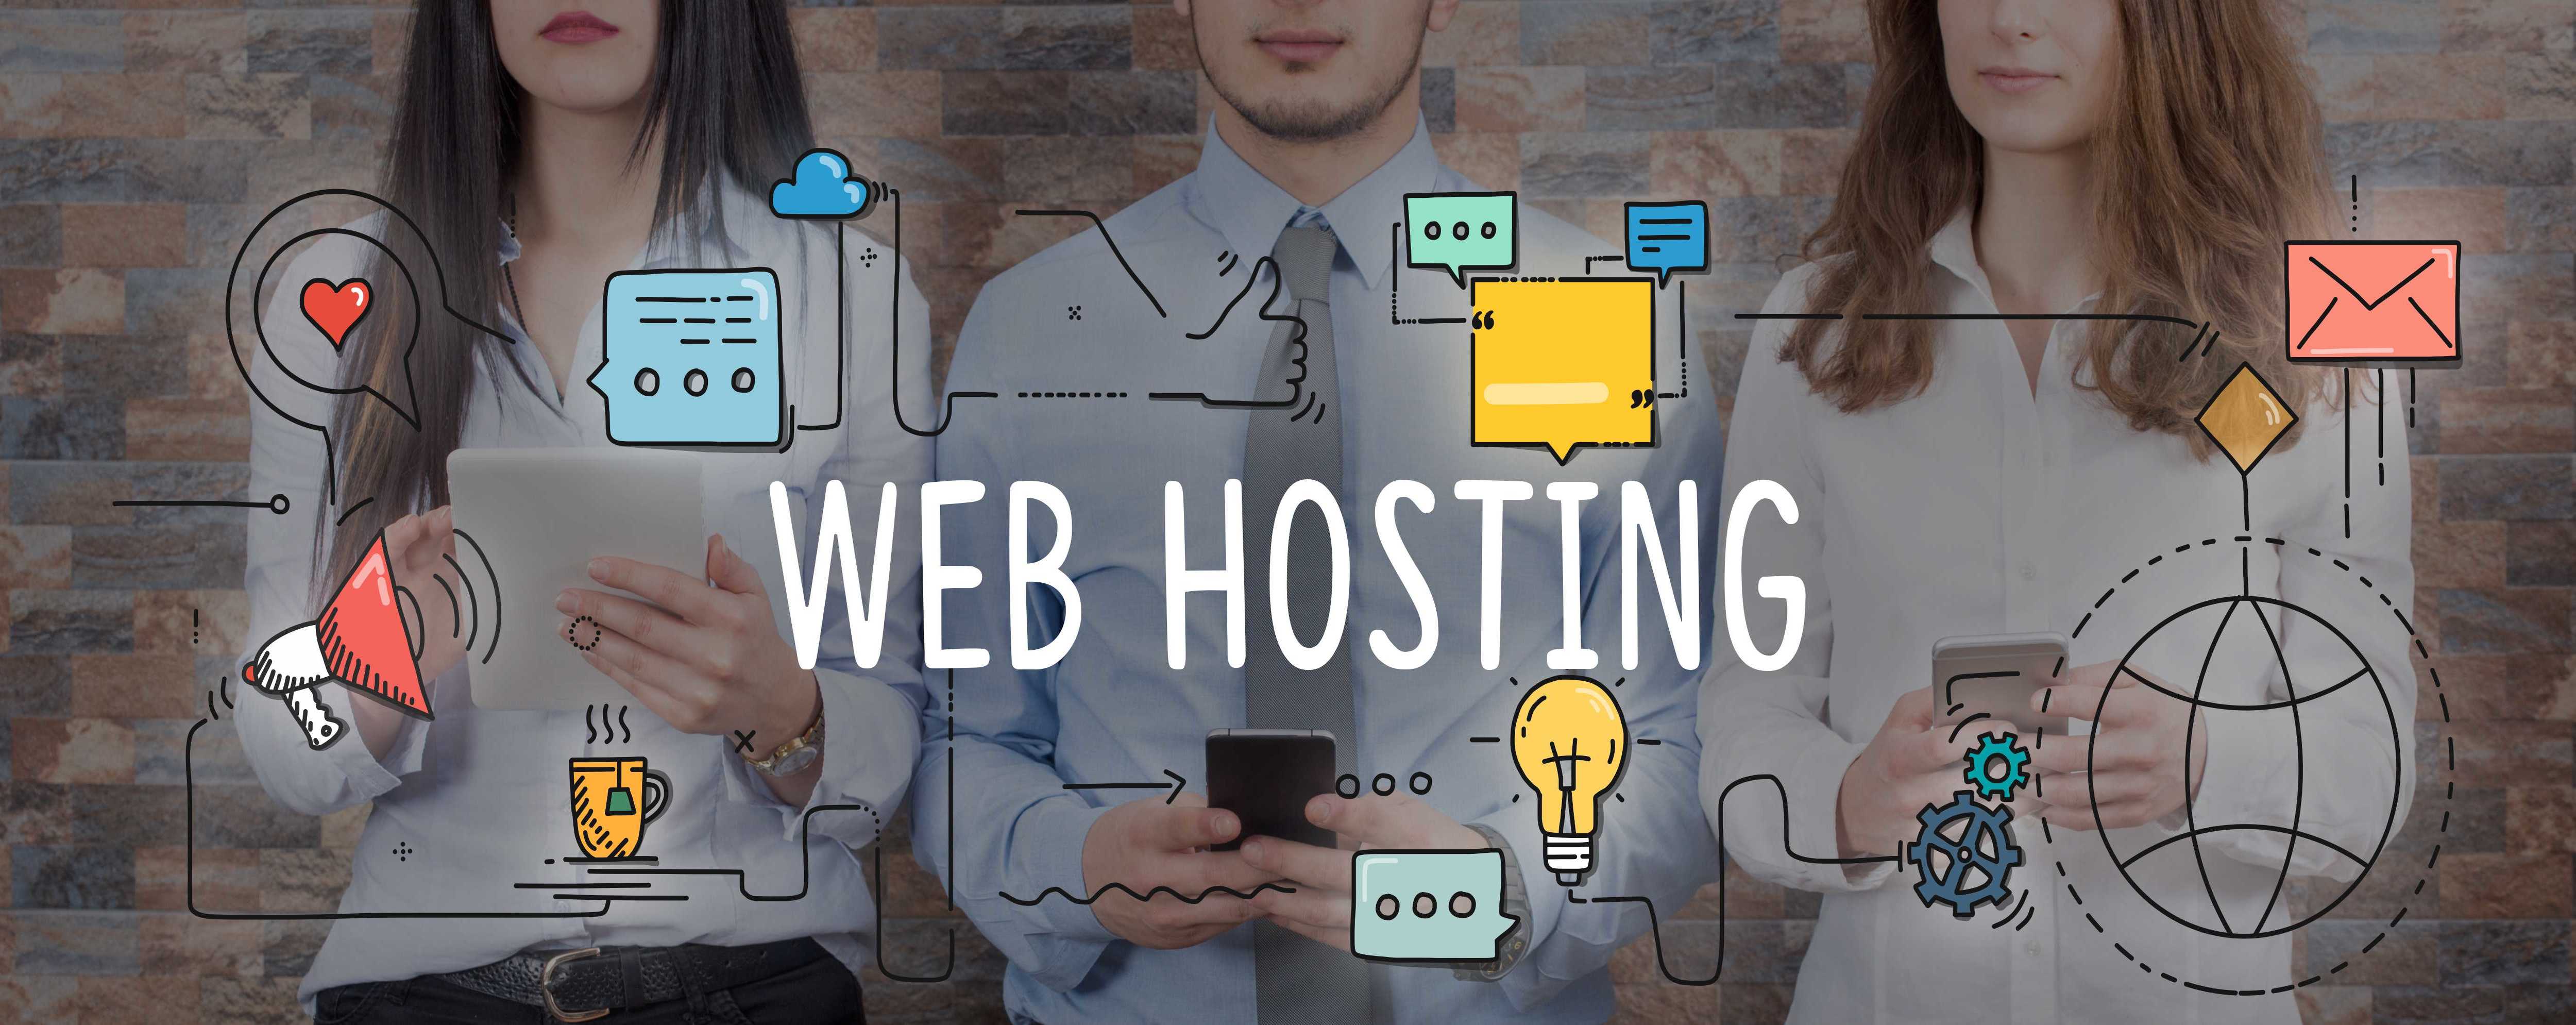 Web_Hosting